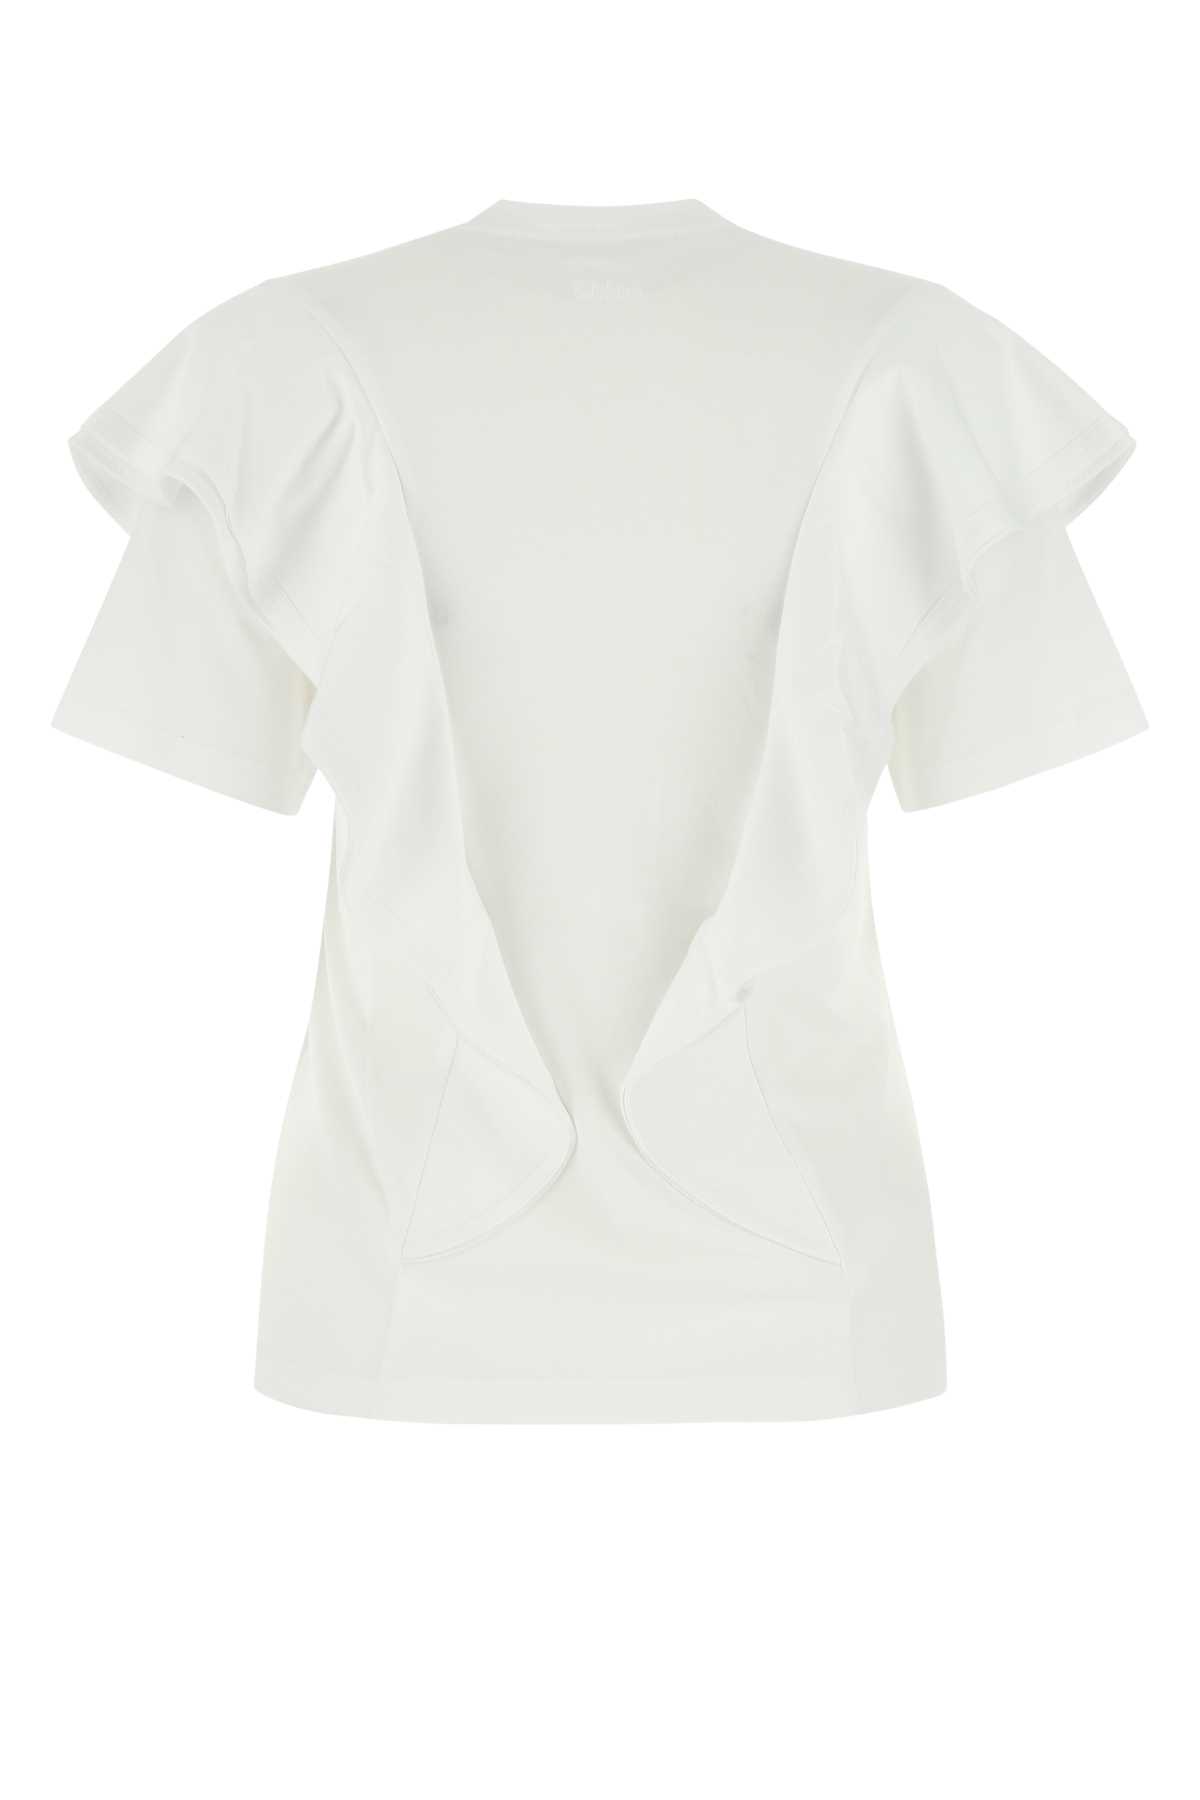 Chloé White Cotton T-shirt In 101